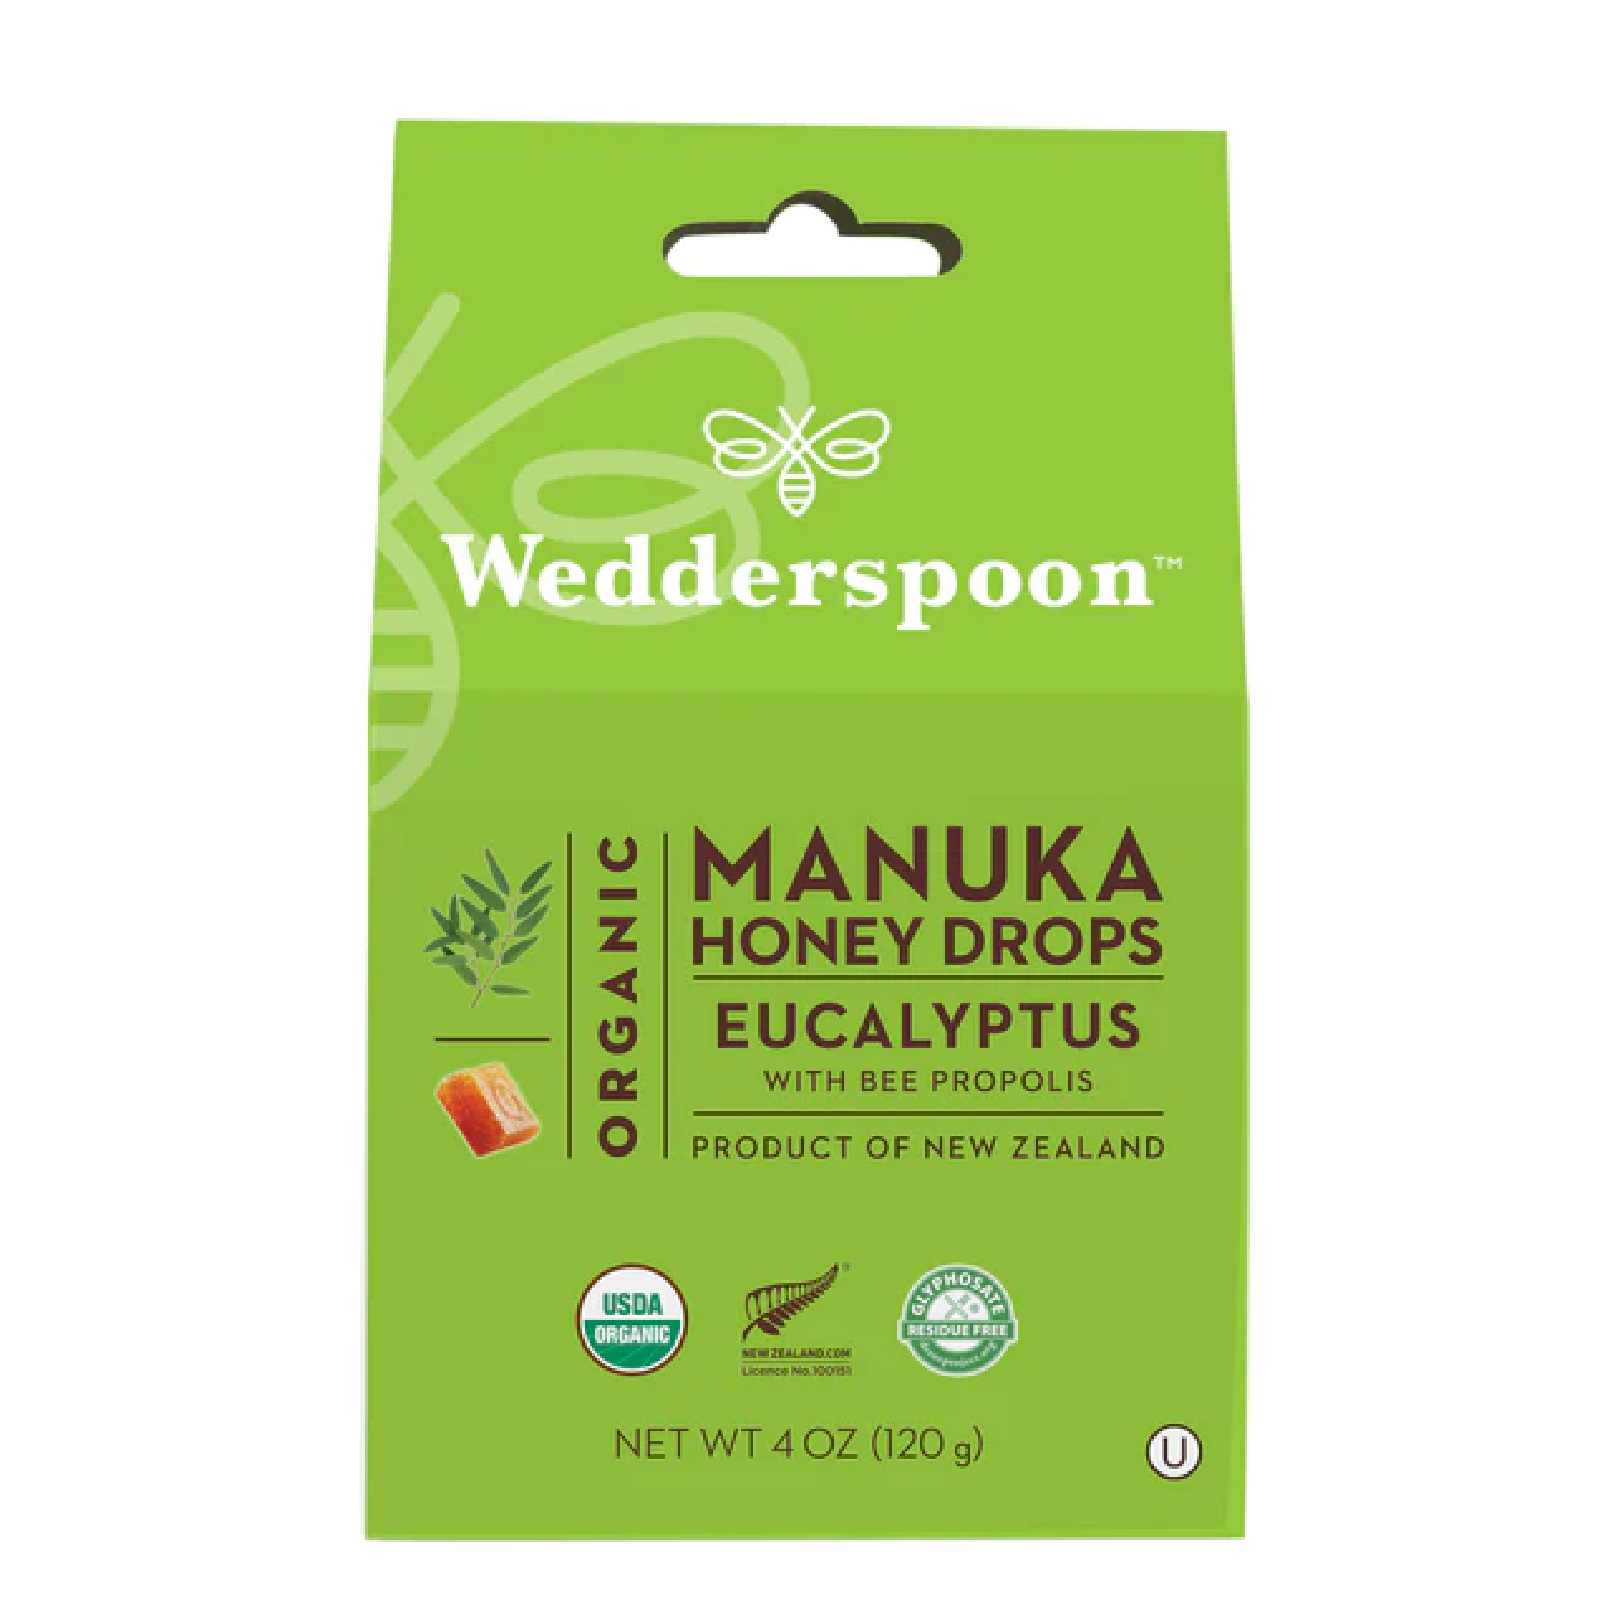 Wedderspoon Org Manuka Honey Drops Eucalyptus / 120g